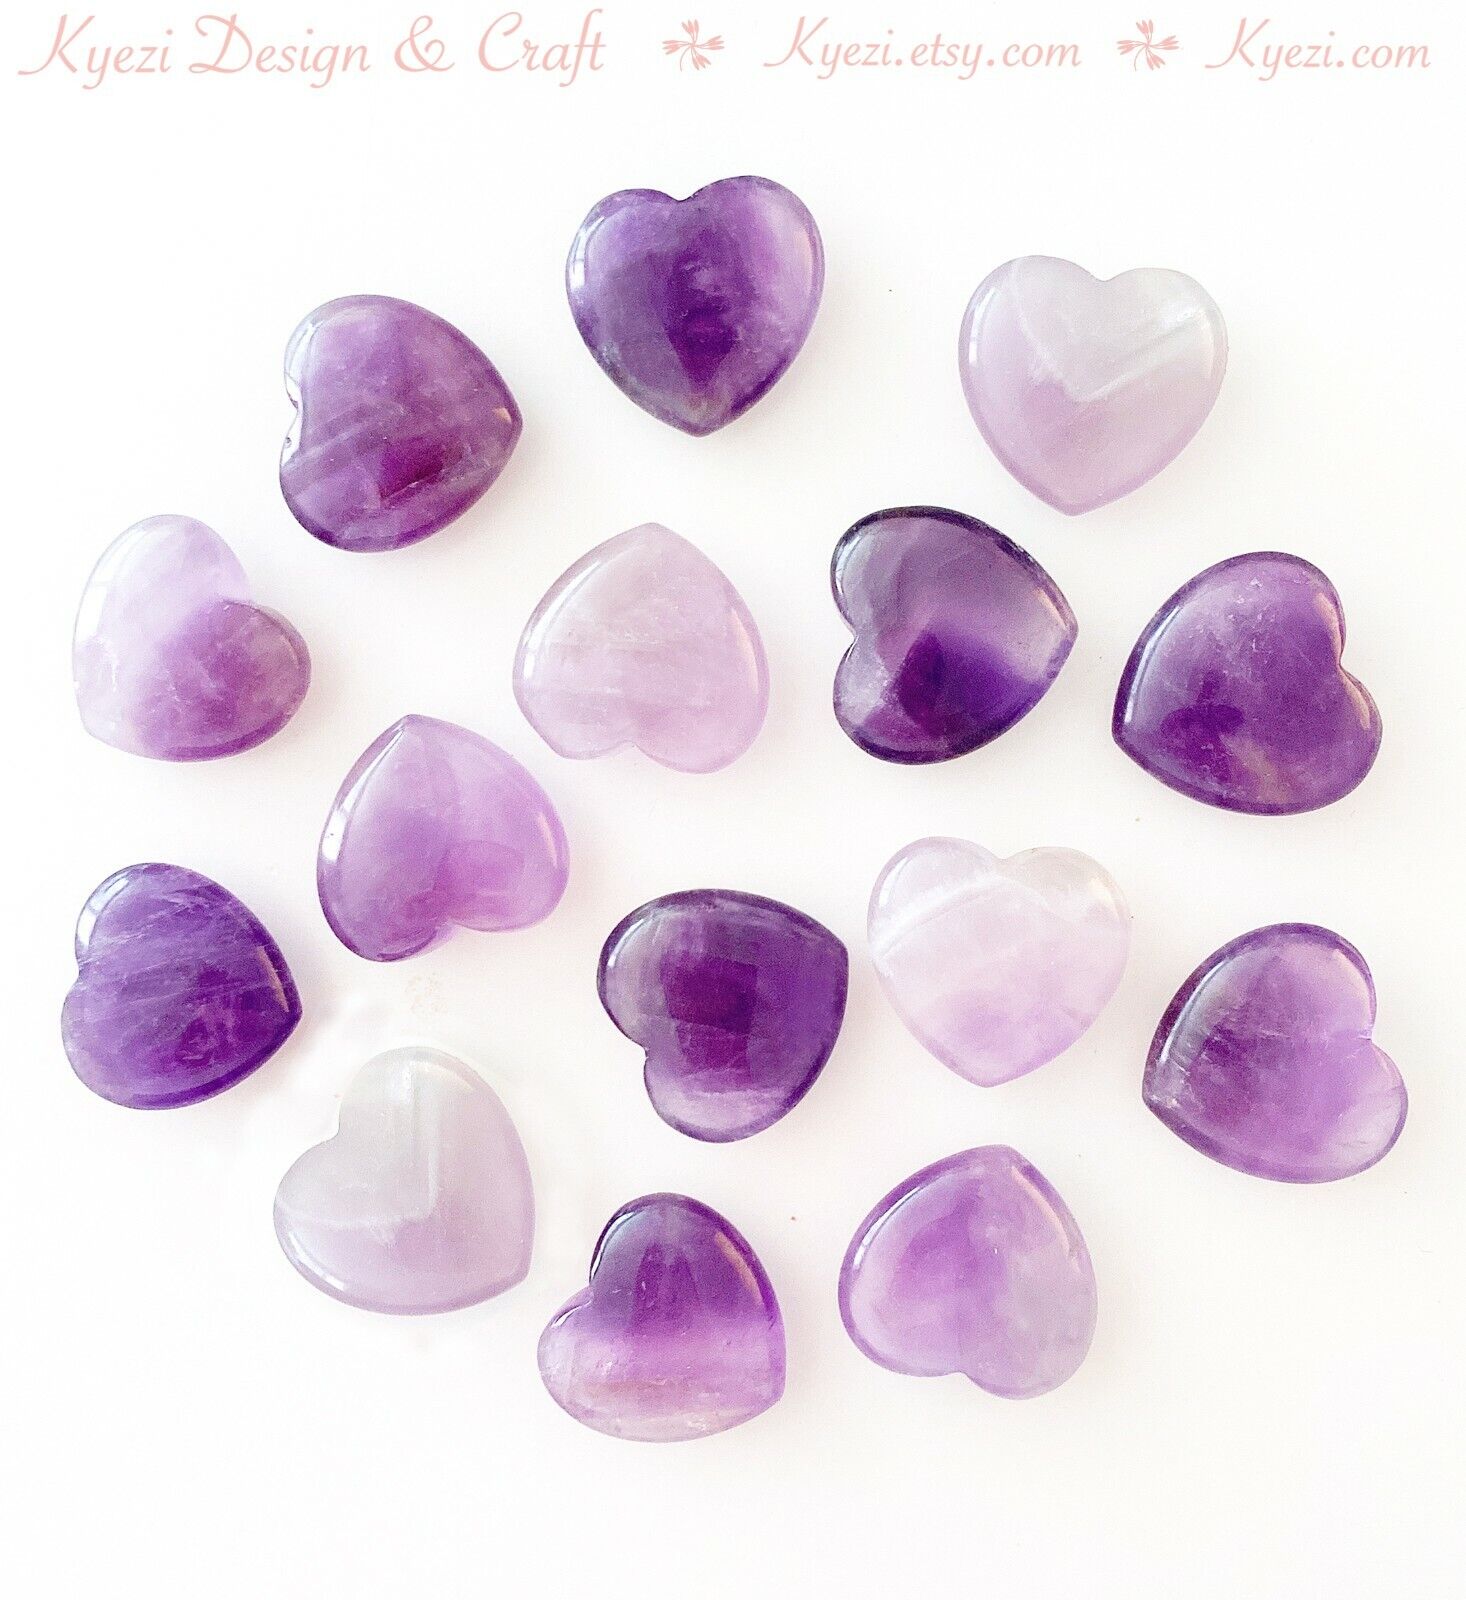 1 - 30pcs 20mm 25mm Amethyst Natural Healing Gemstone Heart Chakra Balance